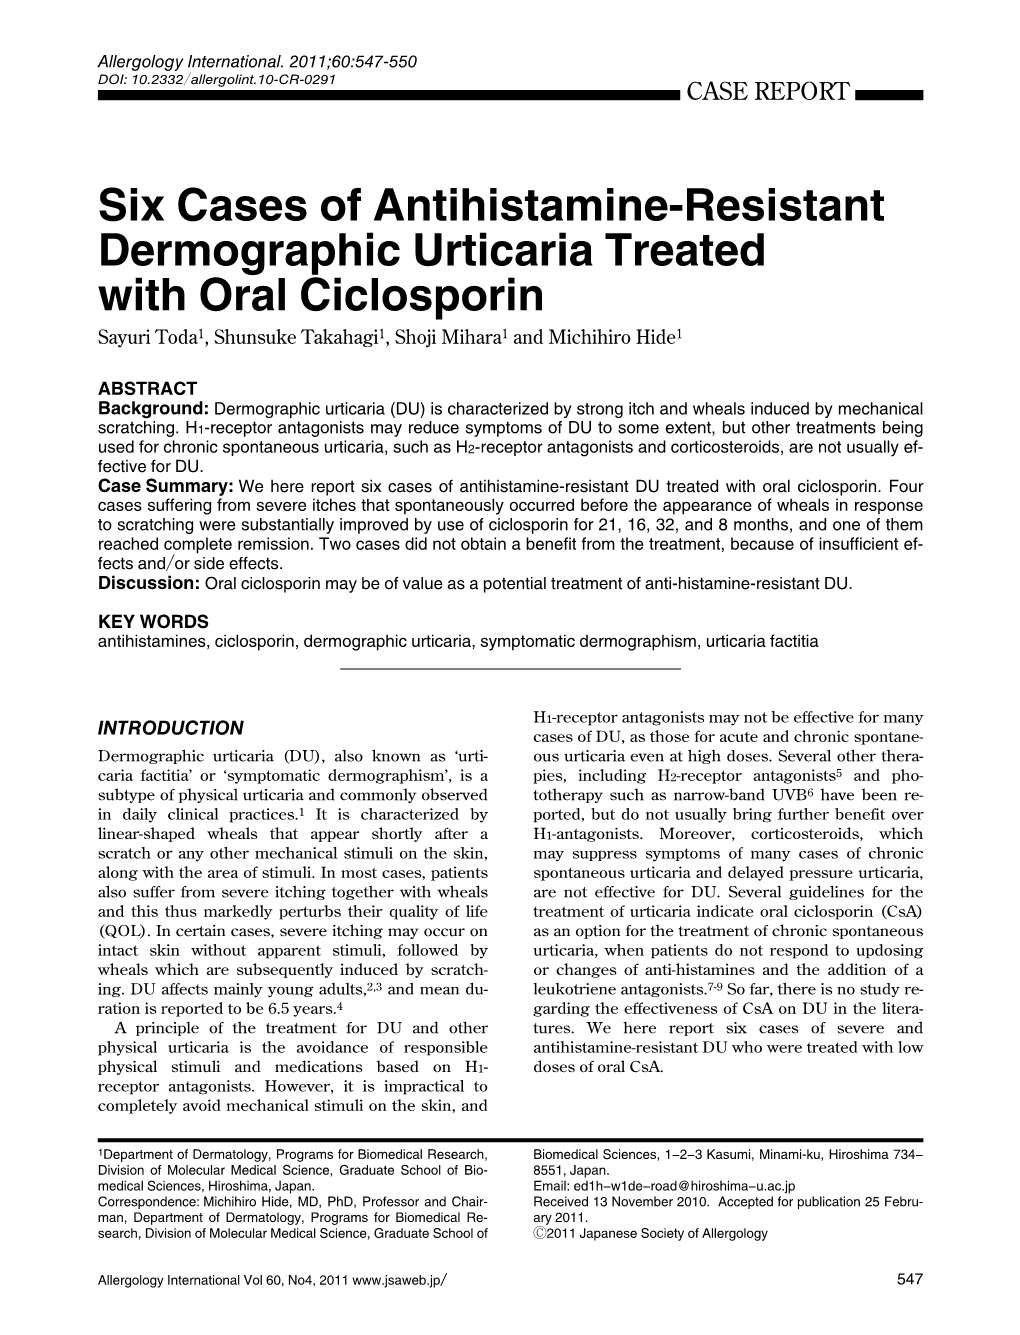 Six Cases of Antihistamine-Resistant Dermographic Urticaria Treated with Oral Ciclosporin Sayuri Toda1, Shunsuke Takahagi1, Shoji Mihara1 and Michihiro Hide1